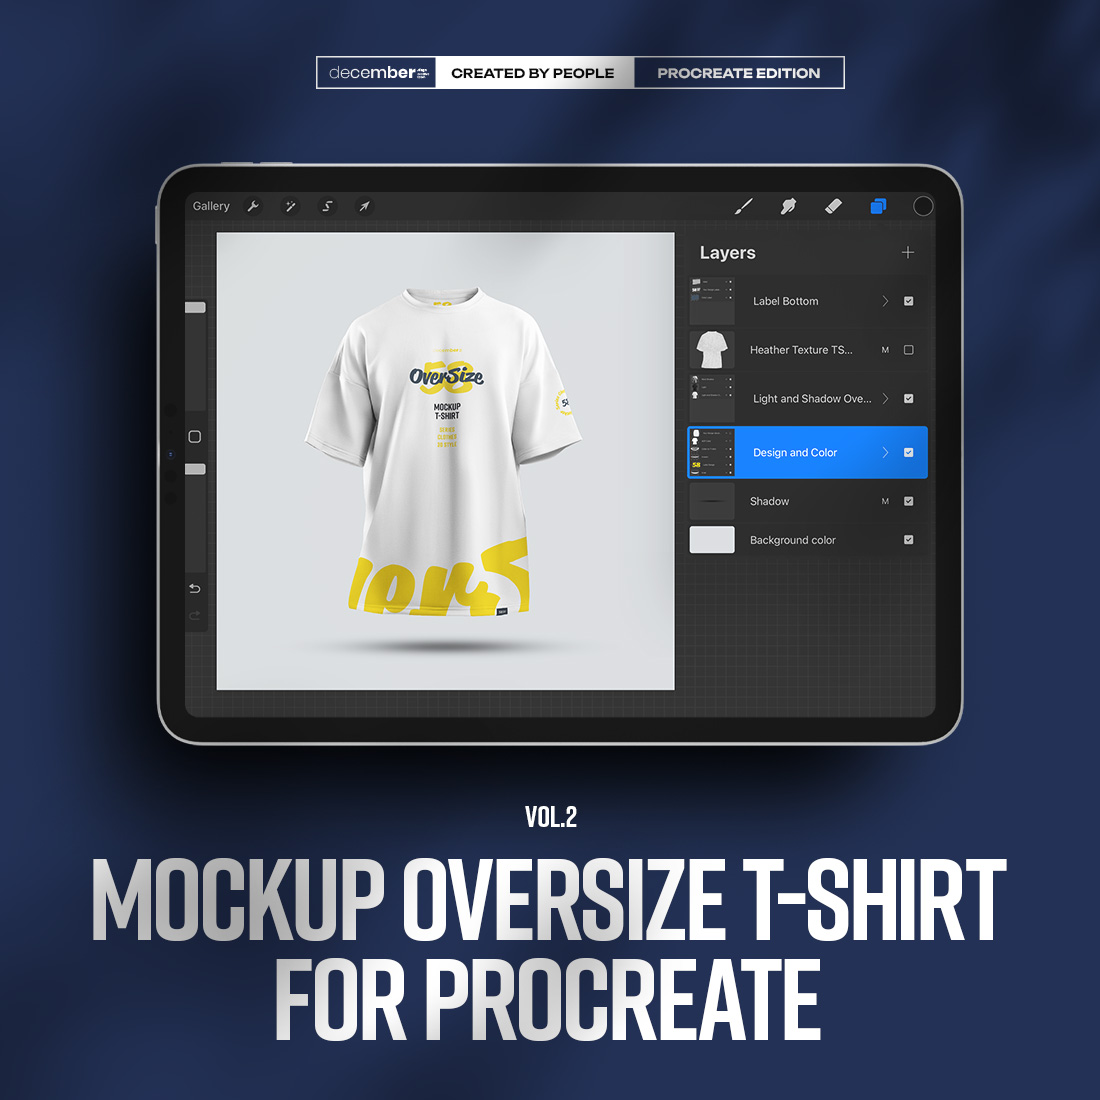 5 Mockups Oversize T-shirt for Procreate vol2 cover image.